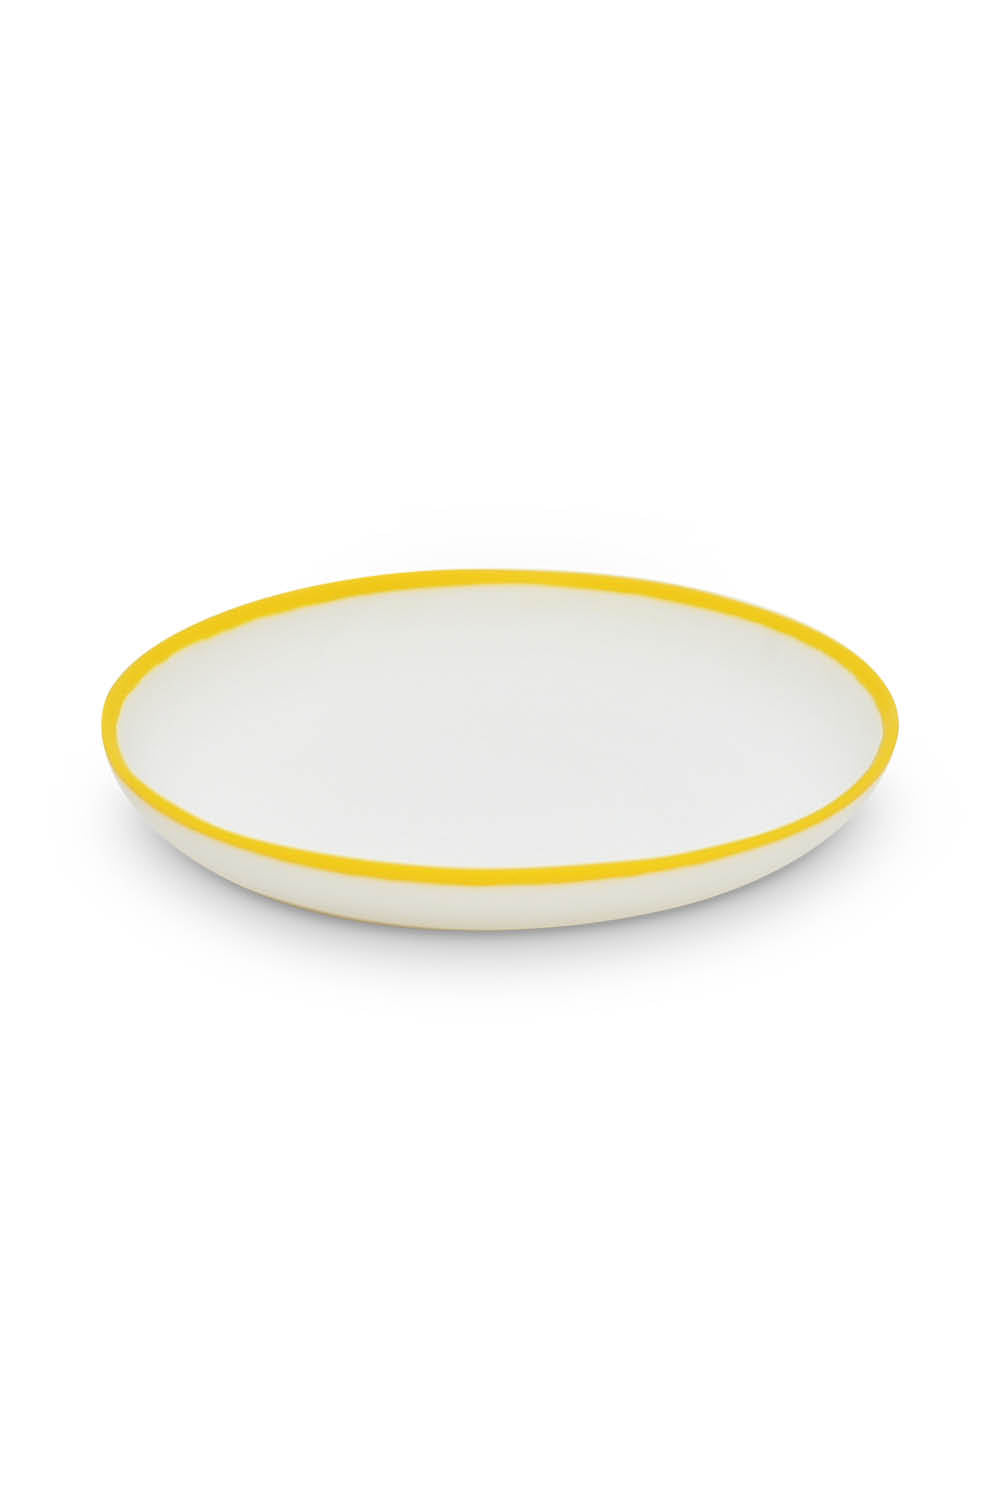 LIGNE Medium Plate in White With Sunshine Yellow Rim